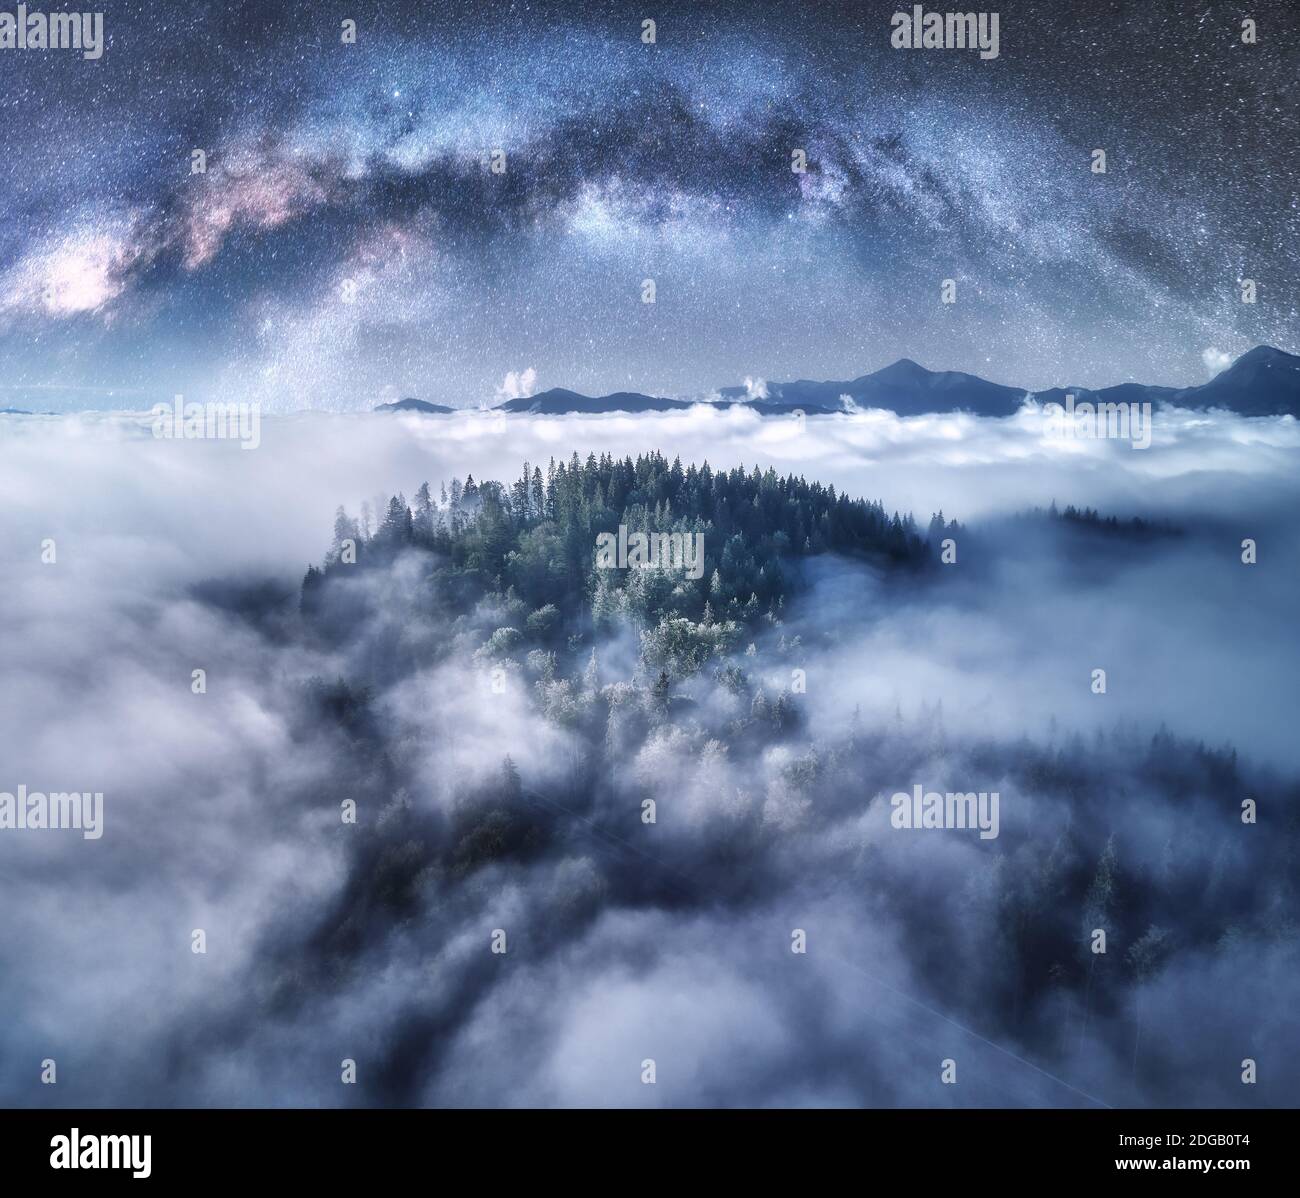 Latty Way si inarca sulle montagne in basse nuvole a. notte stellata Foto Stock